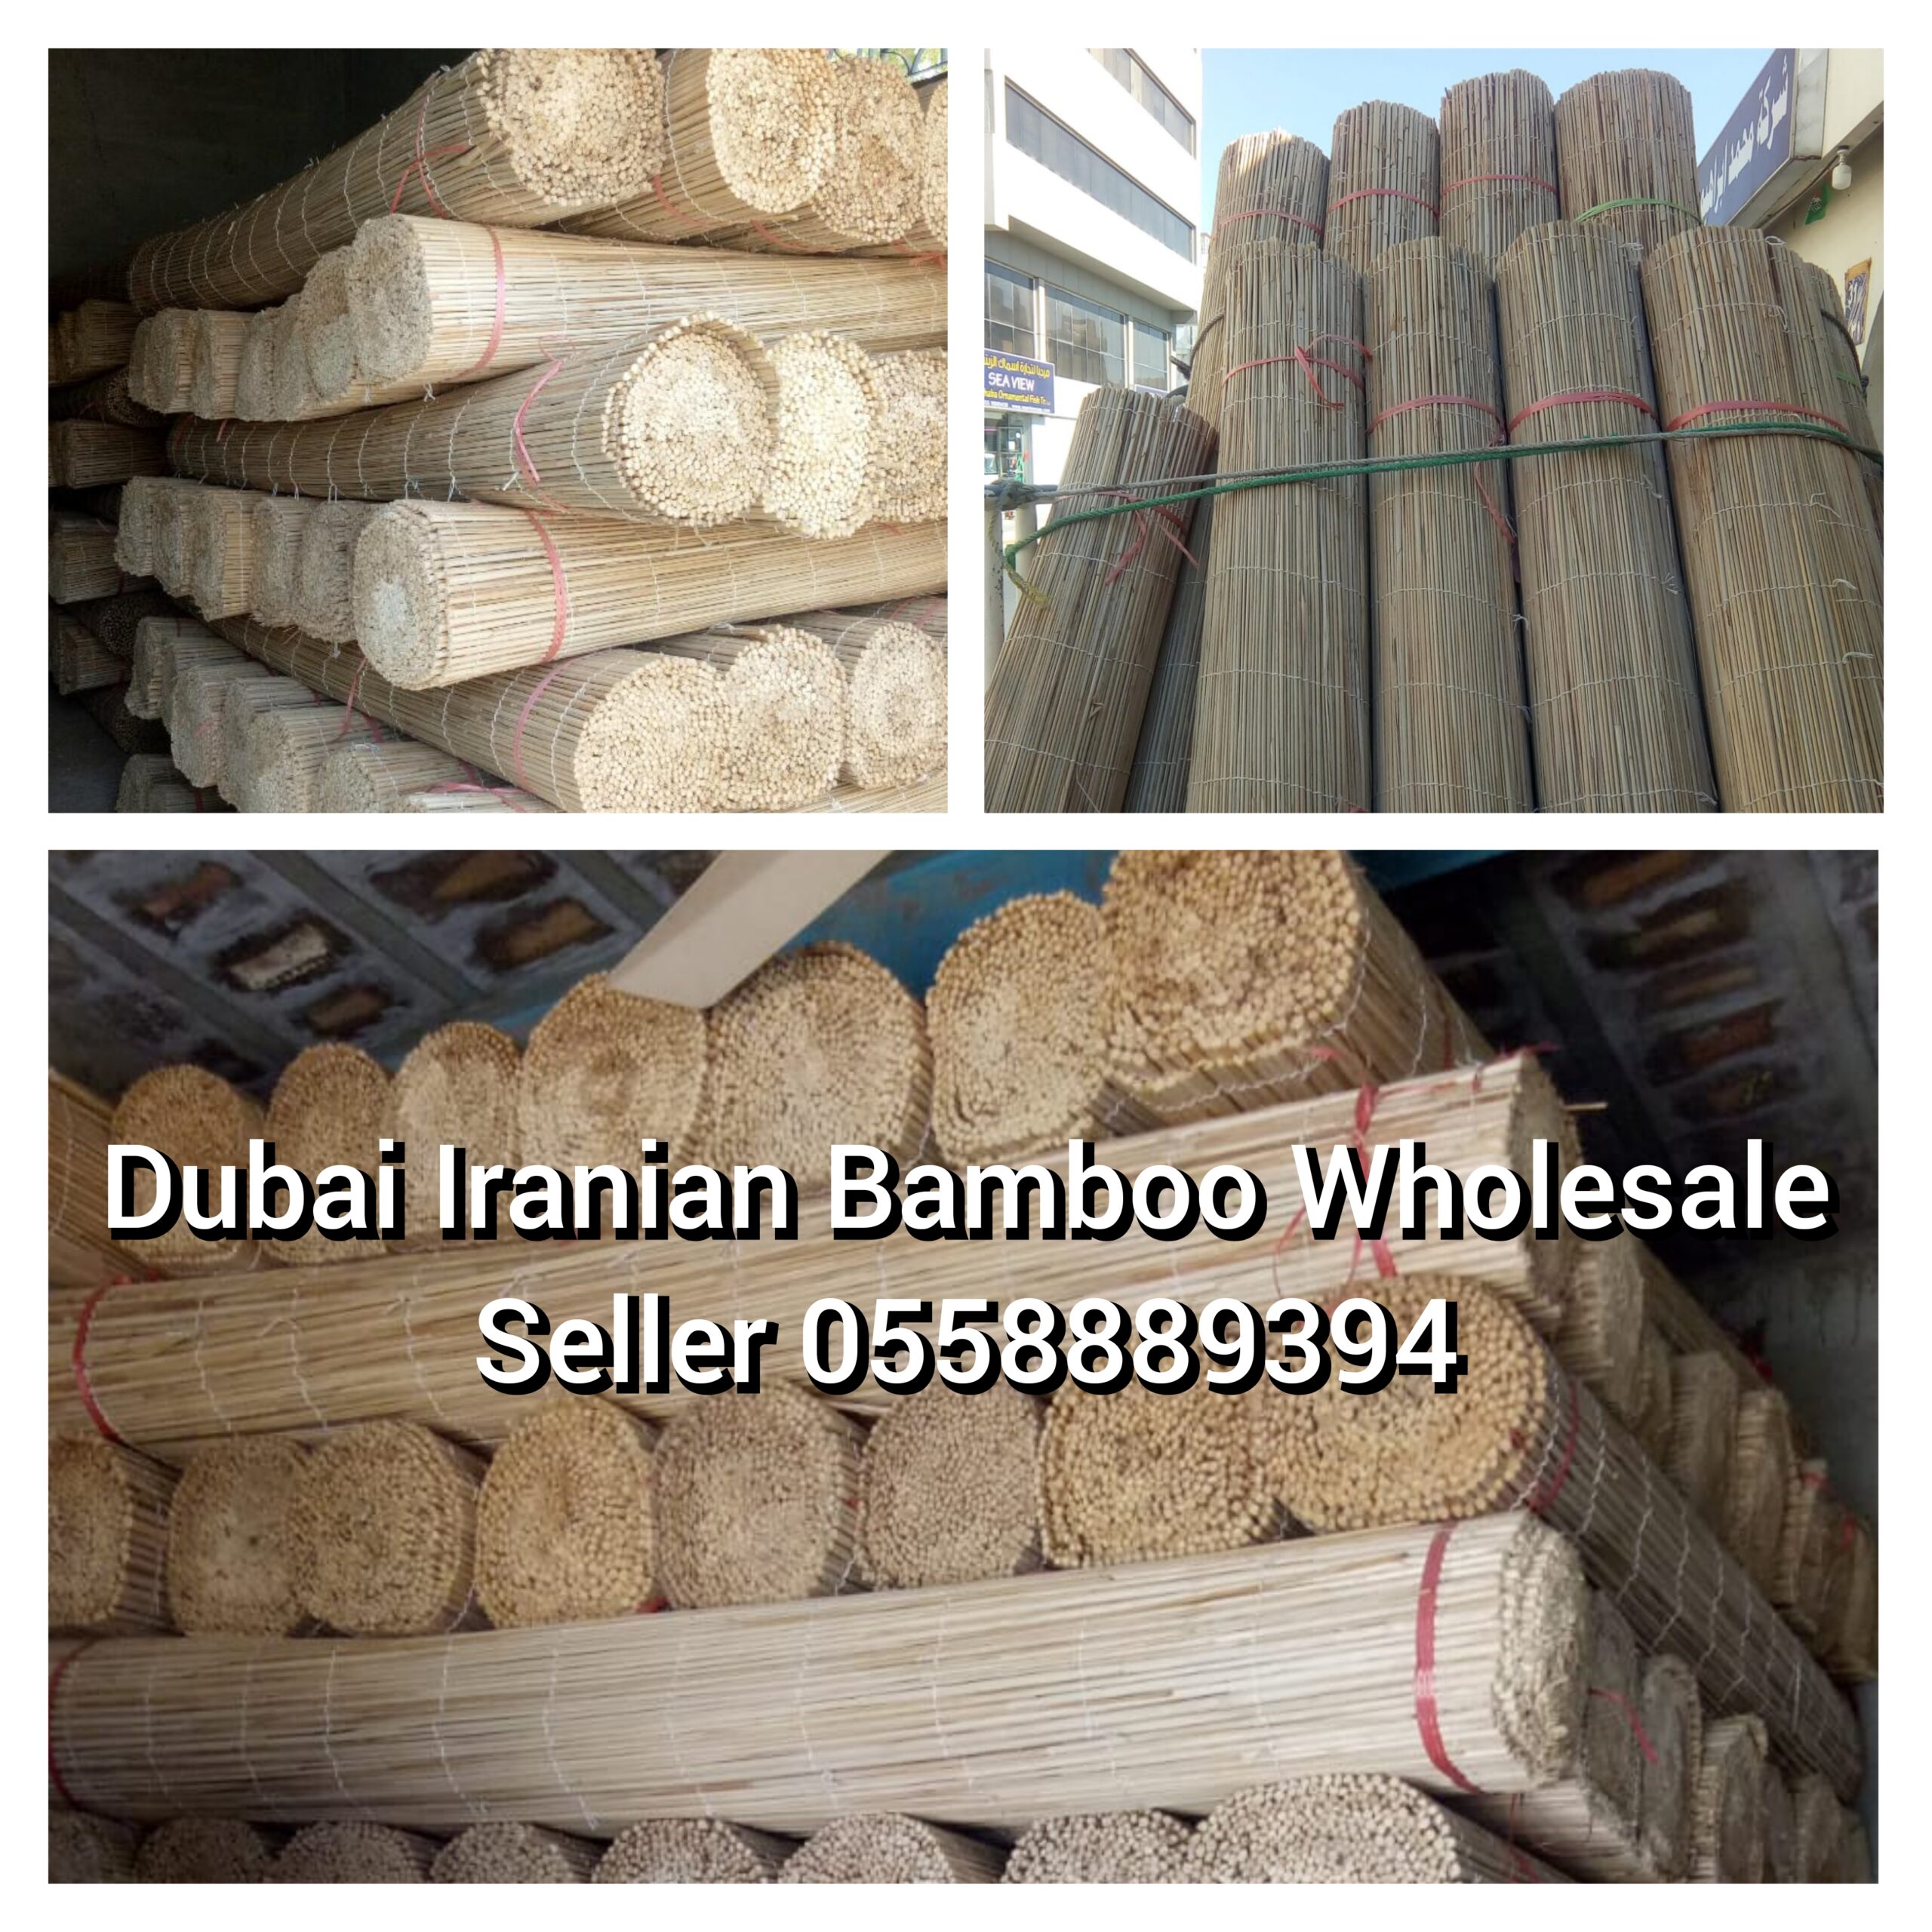 Iranian Bamboo Wholesale seller Dubai